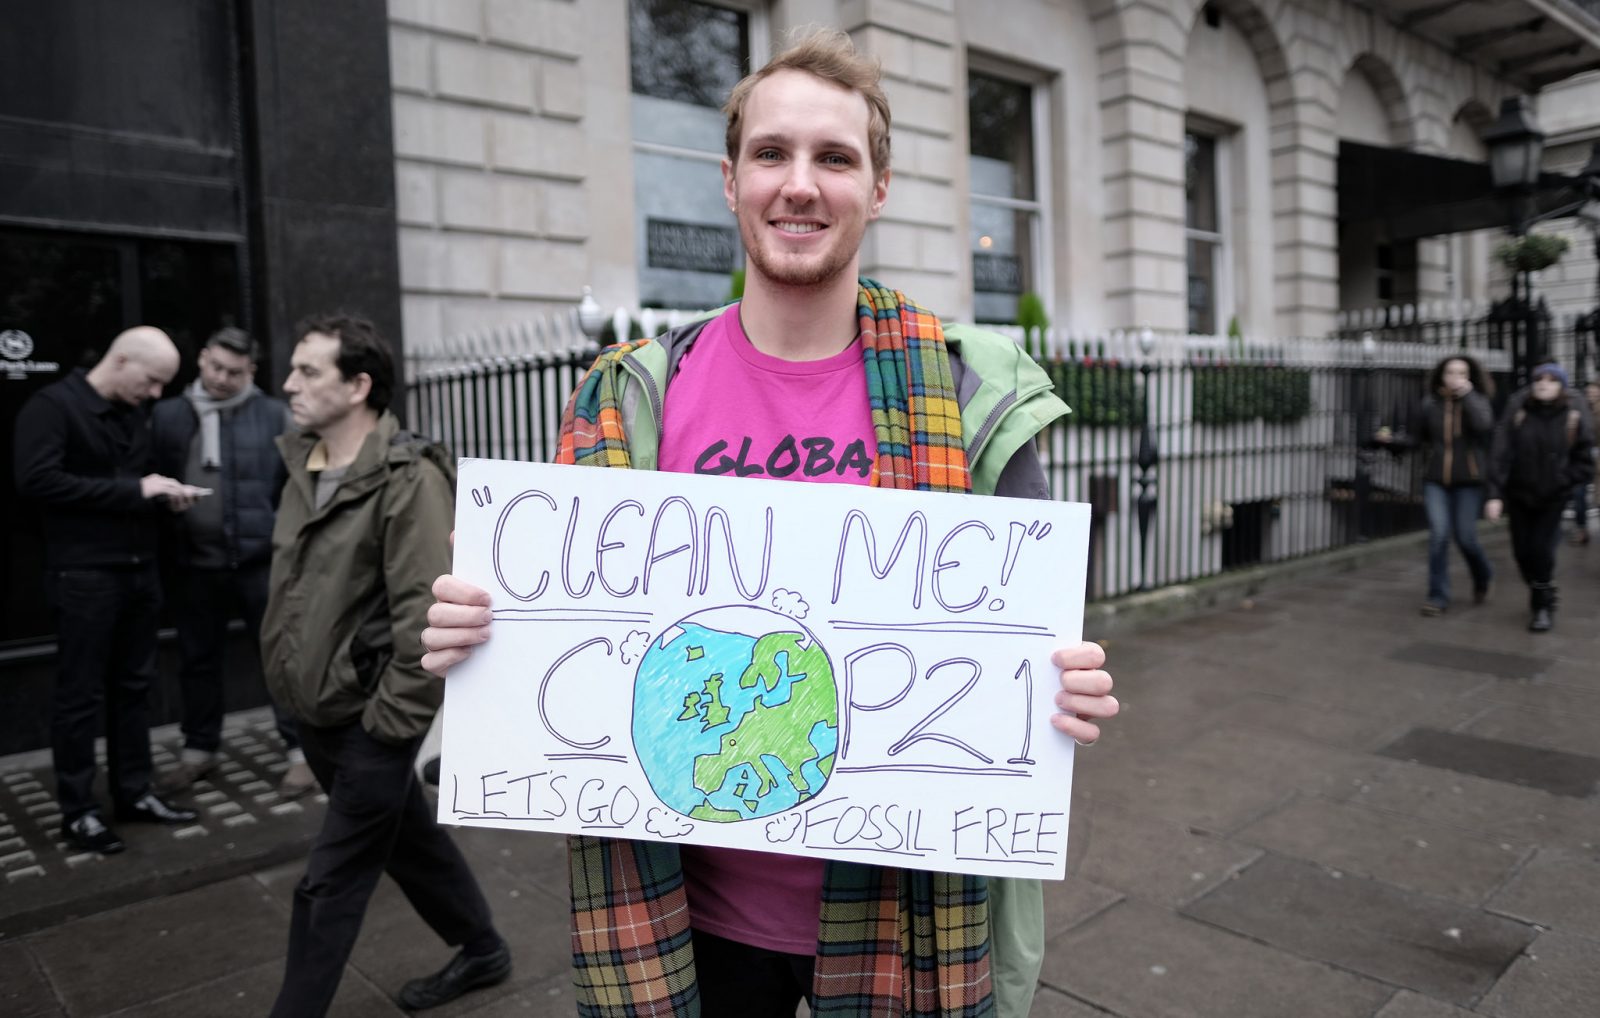 Clean me COP21. Let's go fossil free CC Alisdare Hickson, flickr.com